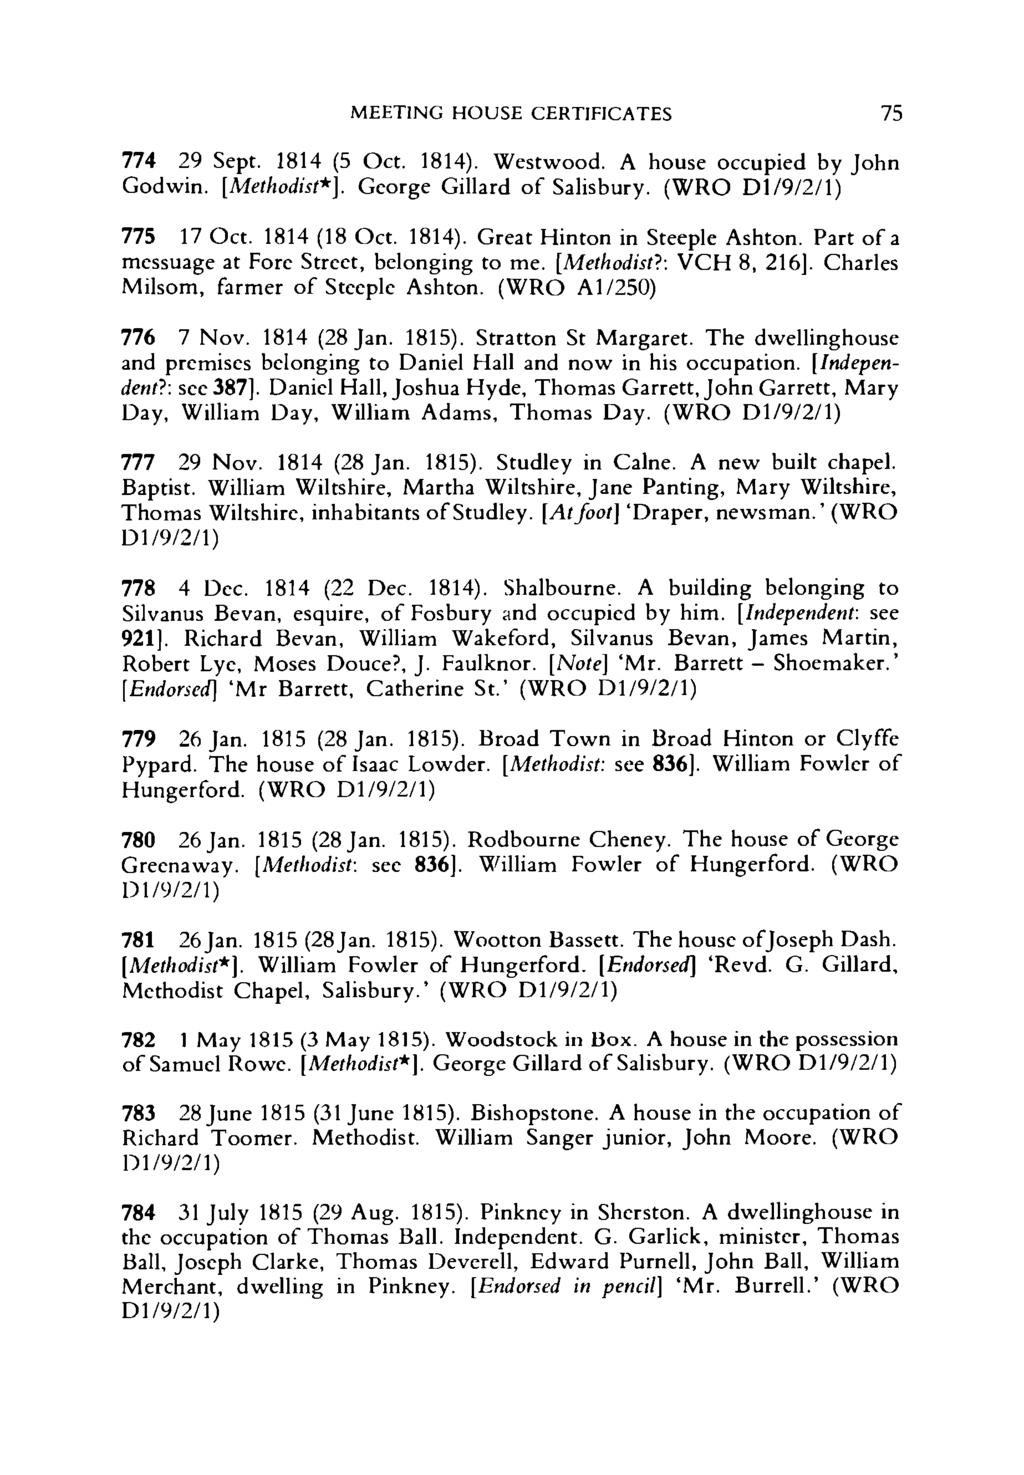 MEETING HOUSE CERTIFICATES 75 774 29 Sept. 1814 (5 Oct. 1814). Westwood. A house occupied by John Godwin. [Methodist*]. George Gillard of Salisbury. (WRO D1/9/2/1) 775 17 Oct. 1814 (18 Oct. 1814). Great Hinton in Steeple Ashton.